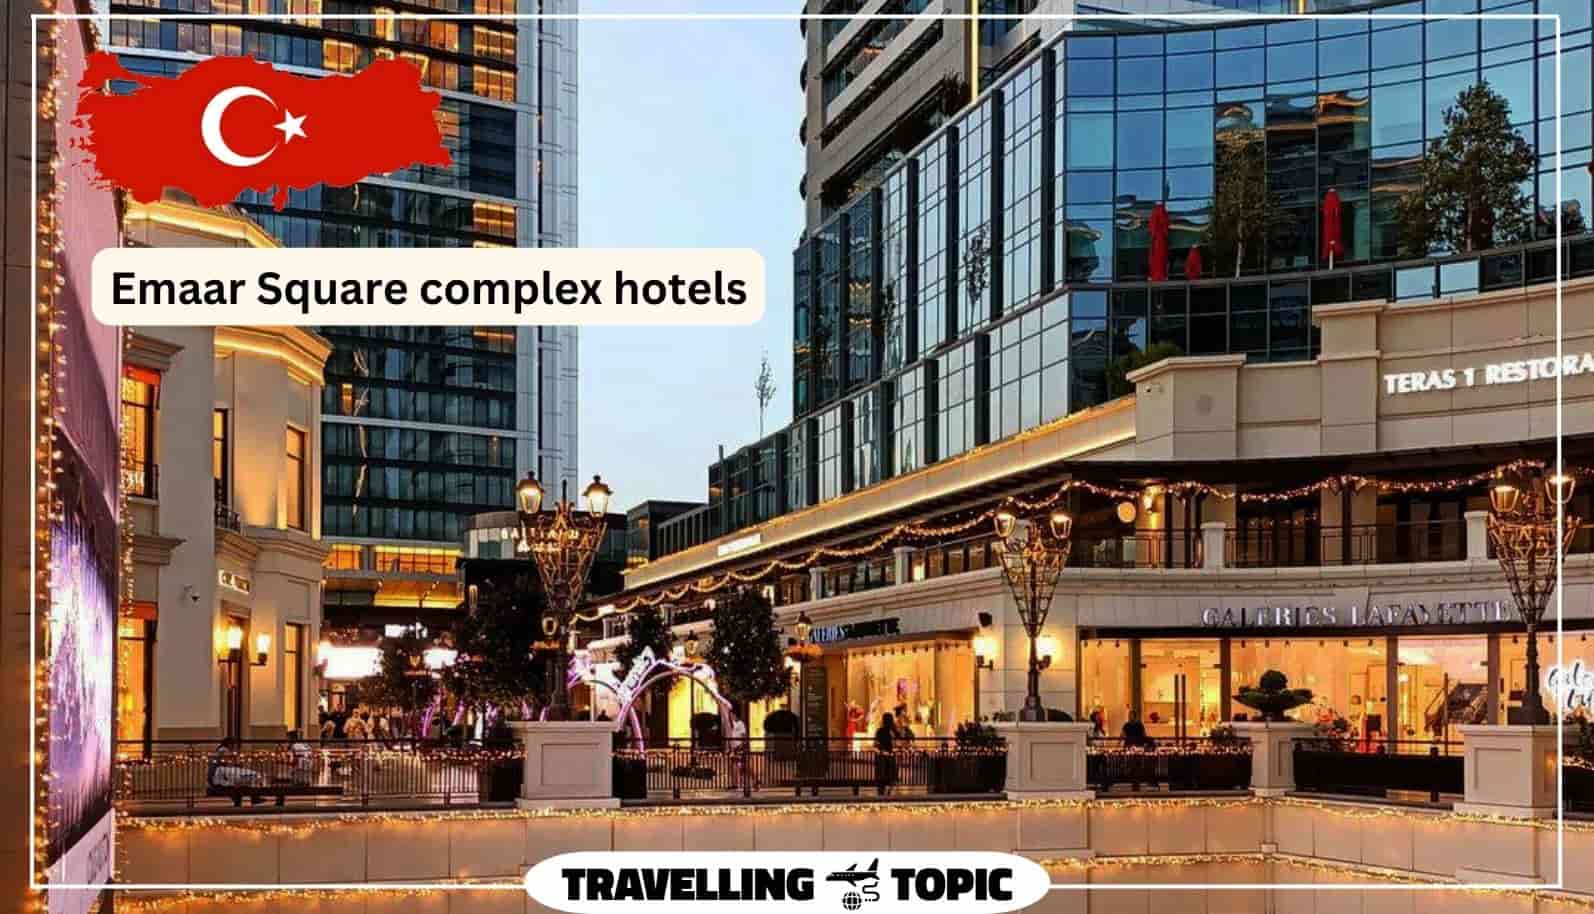 Emaar Square complex hotels